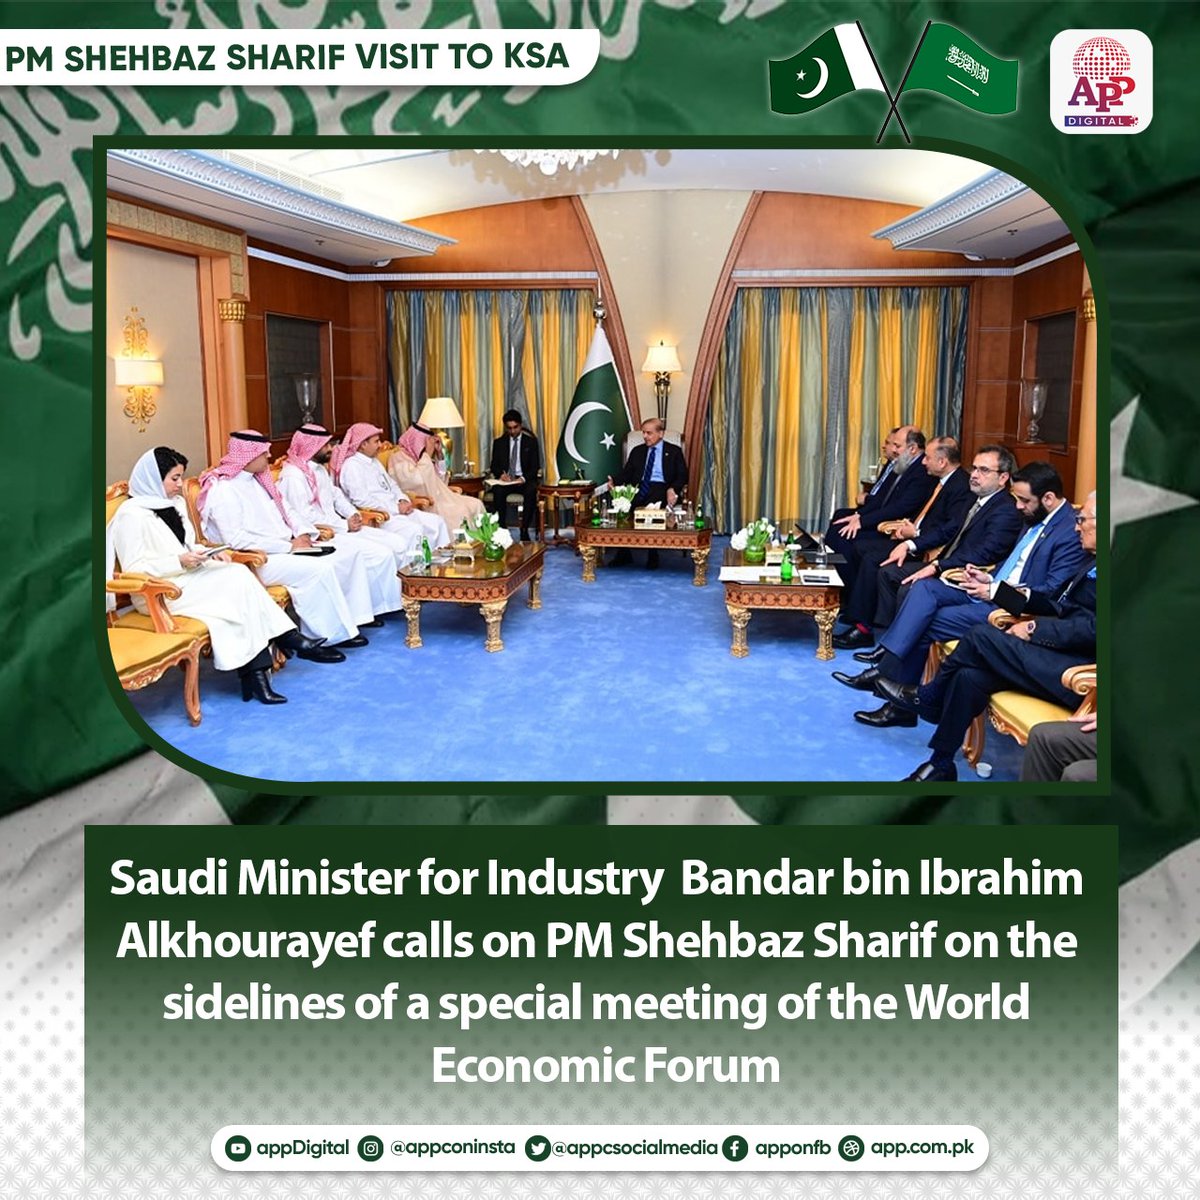 Saudi Minister for Industry H.E. Bandar bin Ibrahim Alkhourayef calls on Prime Minister Muhammad Shehbaz Sharif on the sidelines of a special meeting of the World Economic Forum. #SpecialMeeting24 #PMShehbazatWEFRiyadh